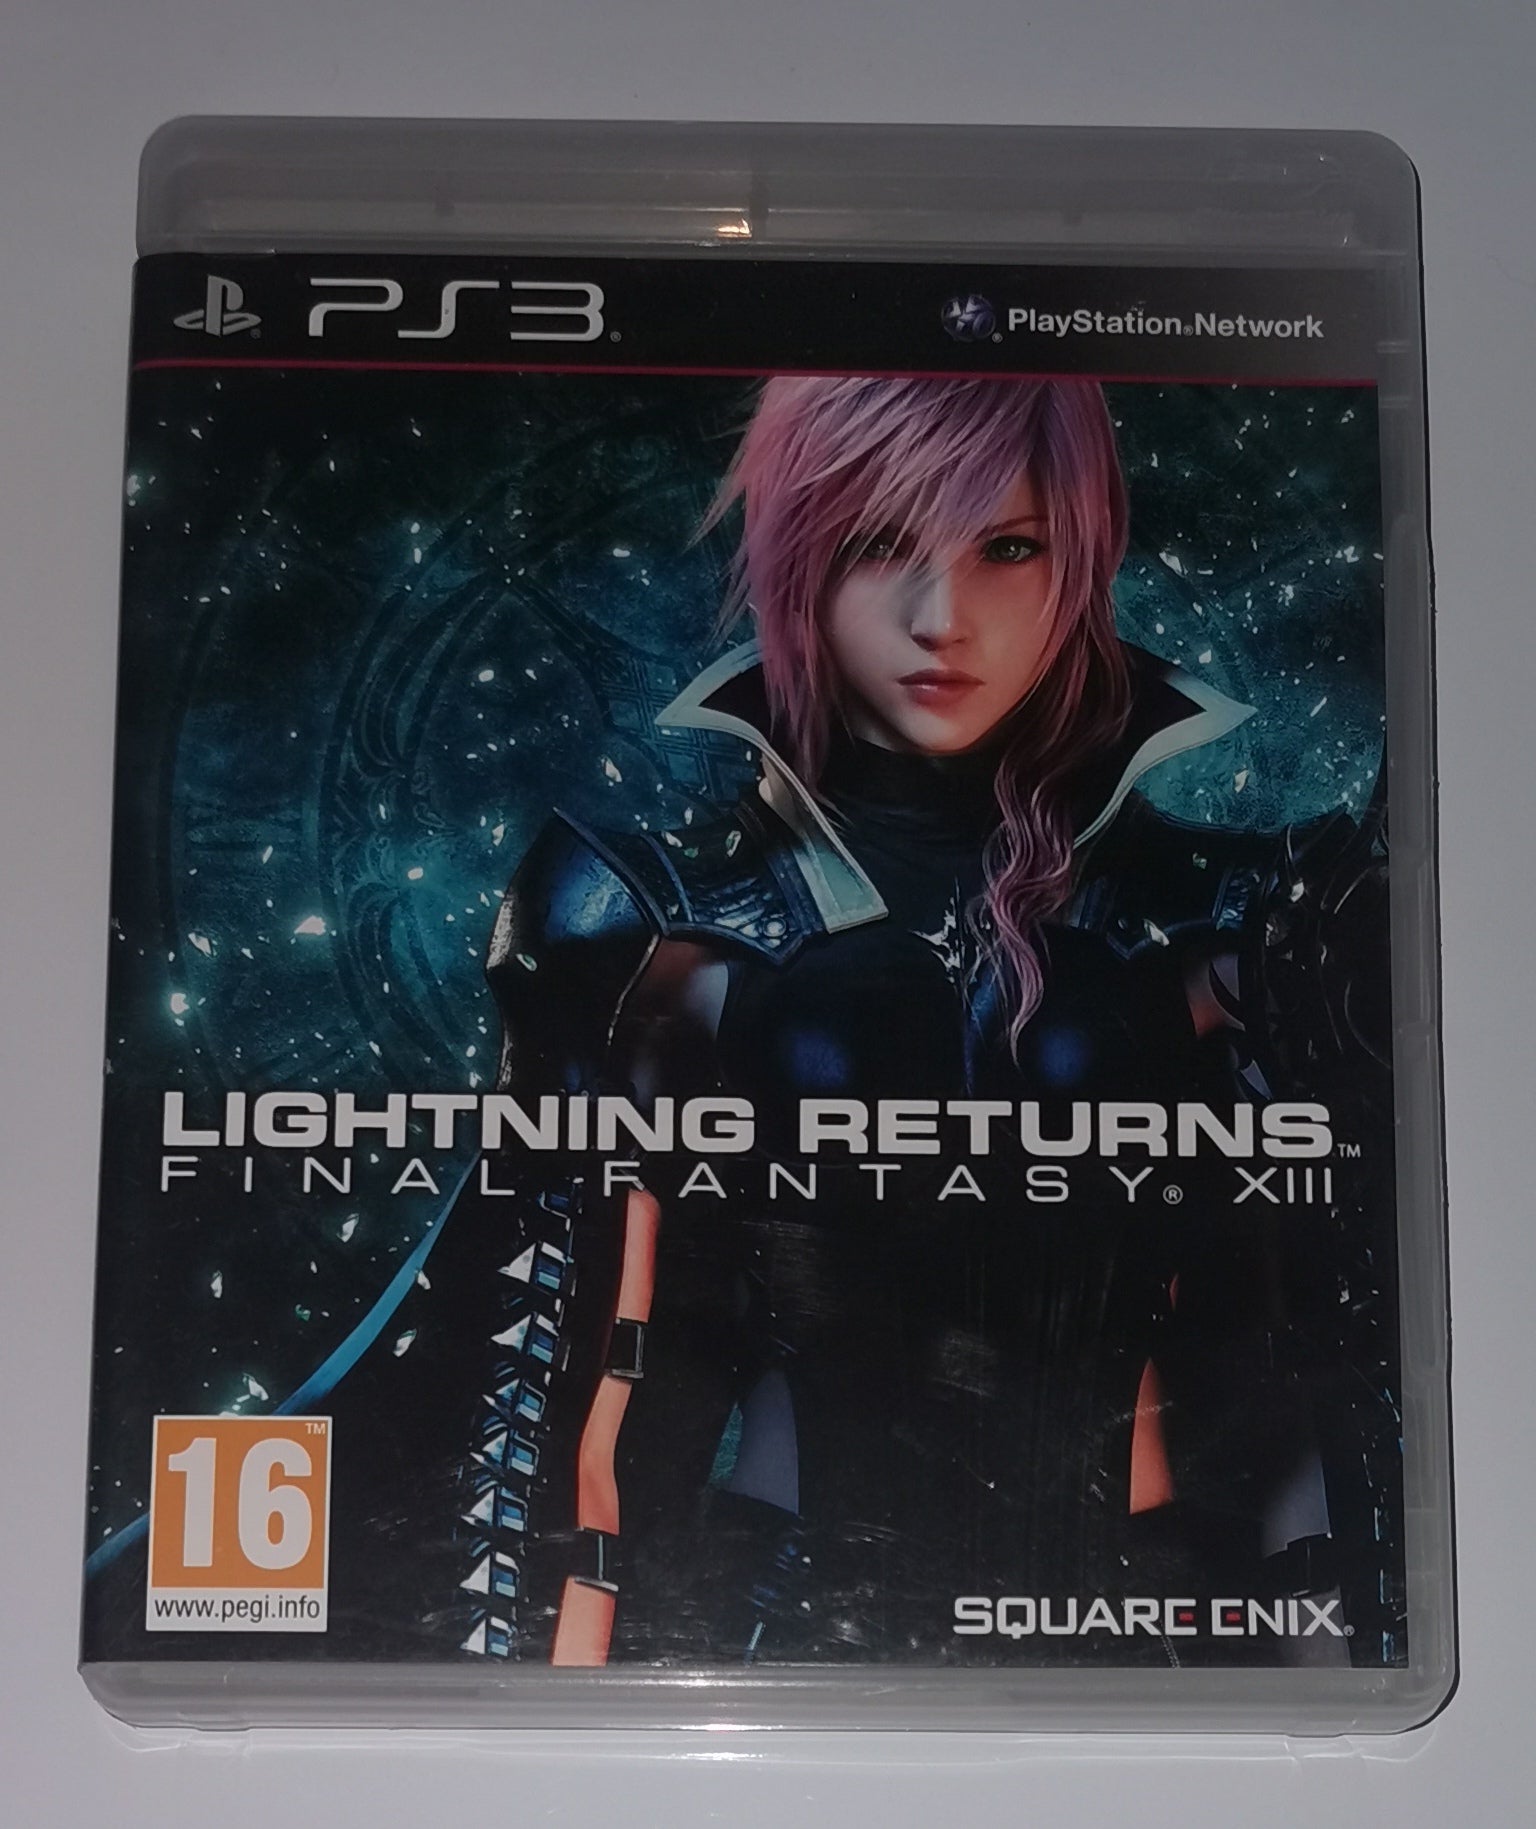 Final Fantasy XIII Lightning Returns [UK] [UK] (Playstation 3) [Gut]